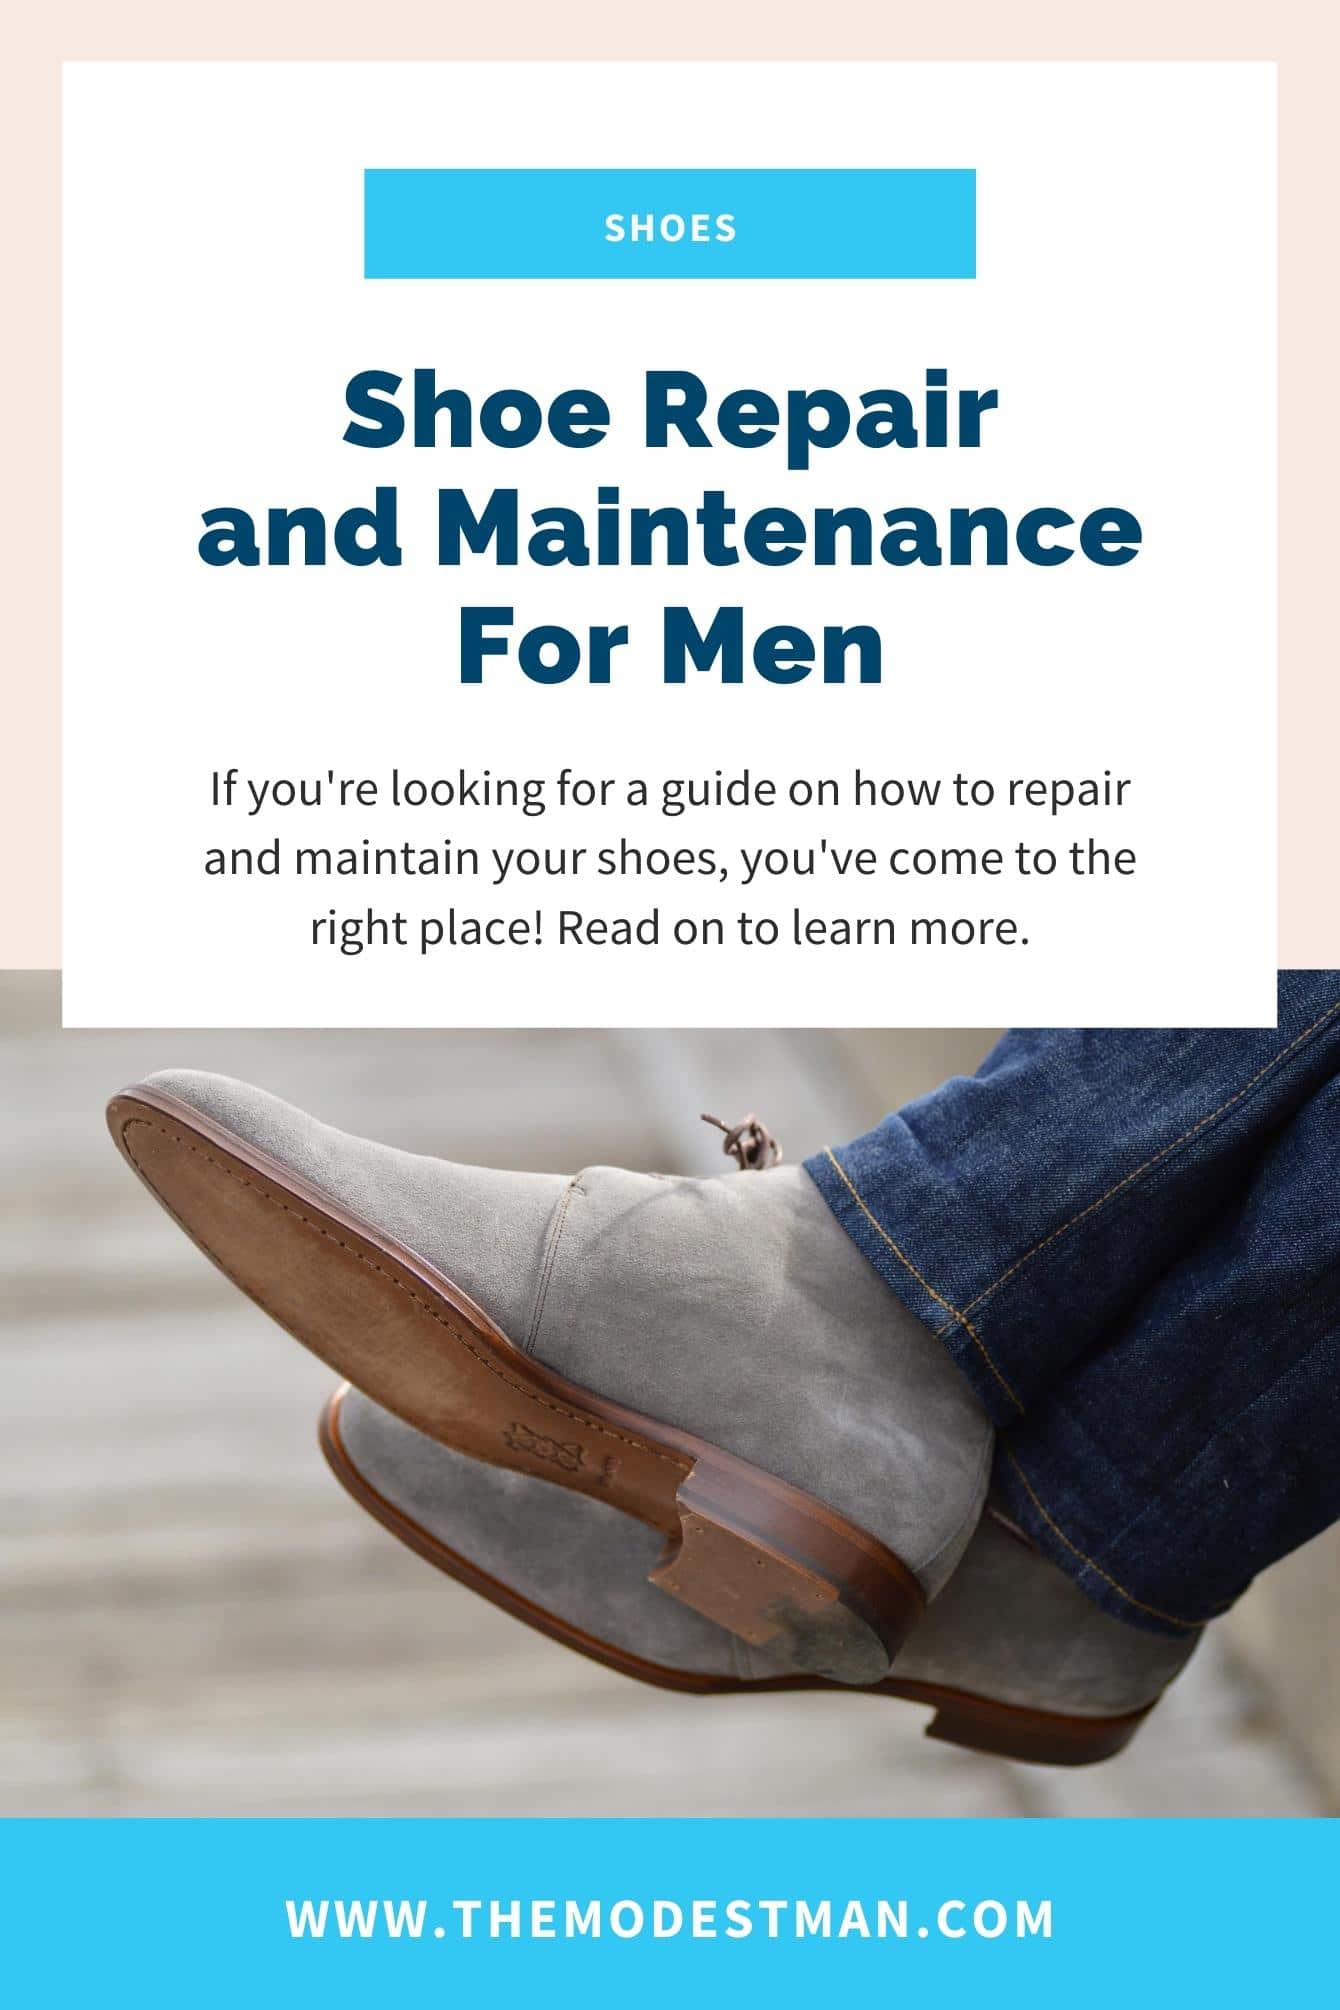 Shoe Repair - Clothing Care